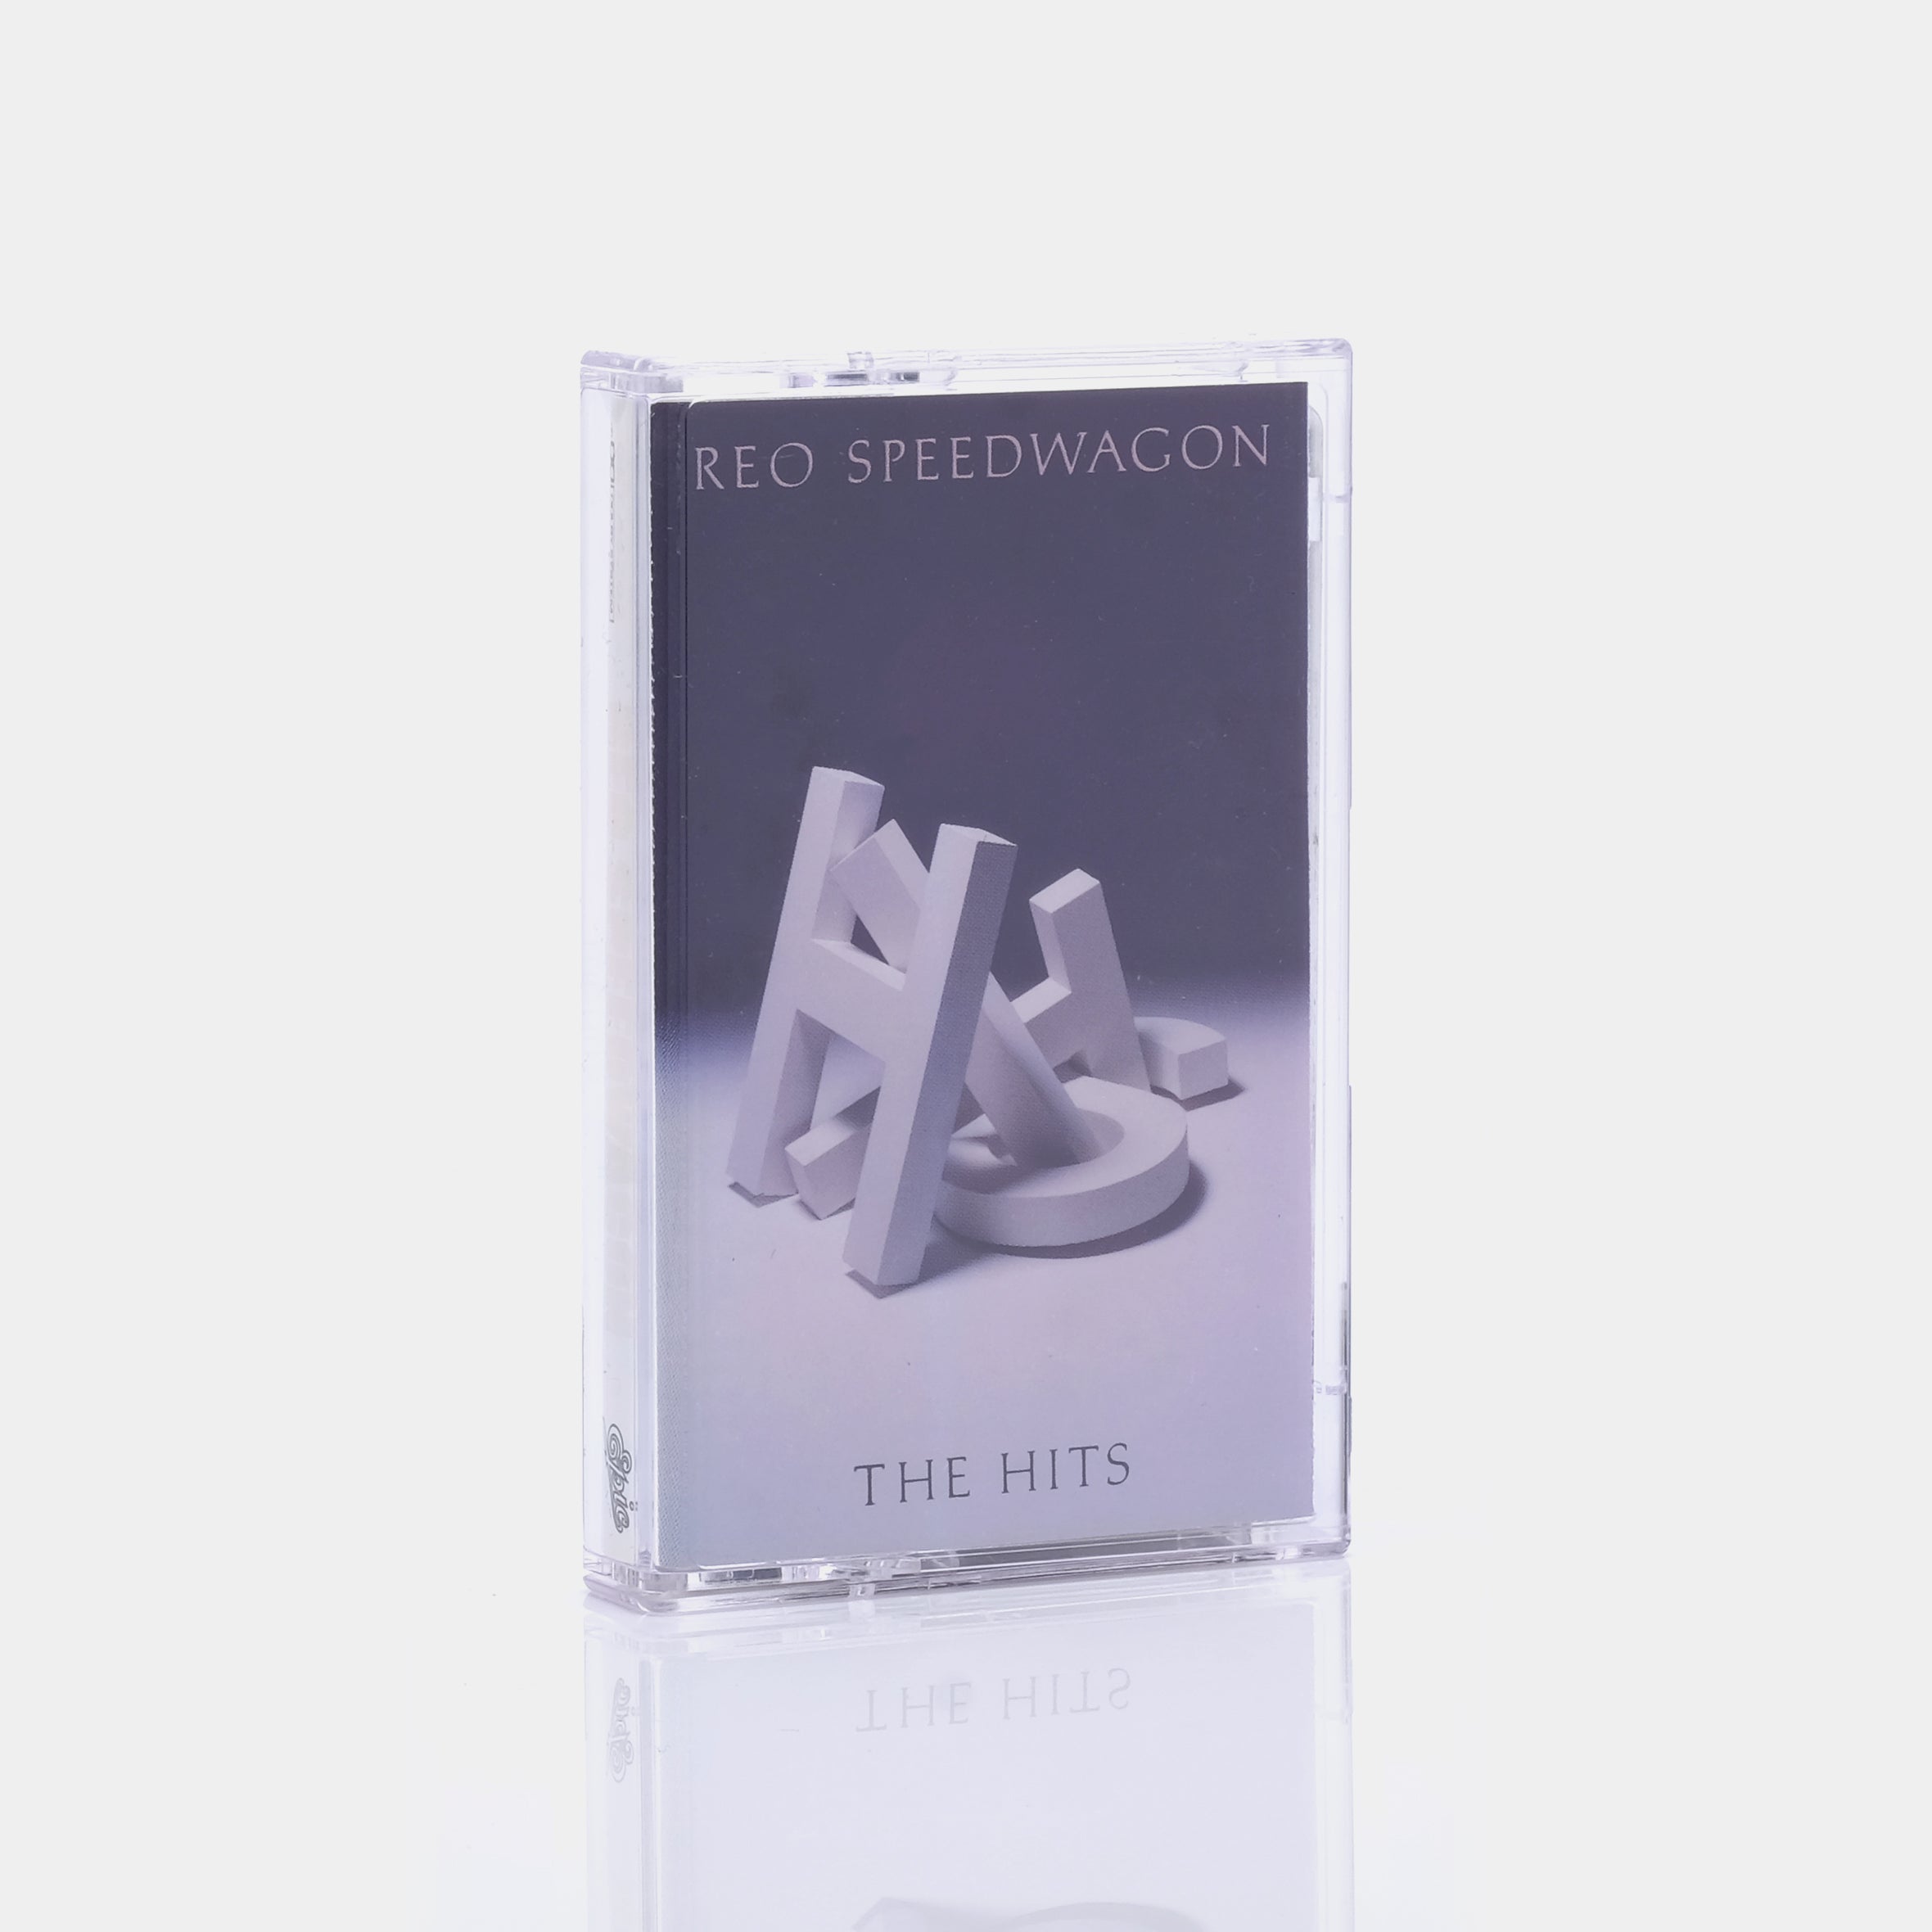 REO Speedwagon - The Hits Cassette Tape